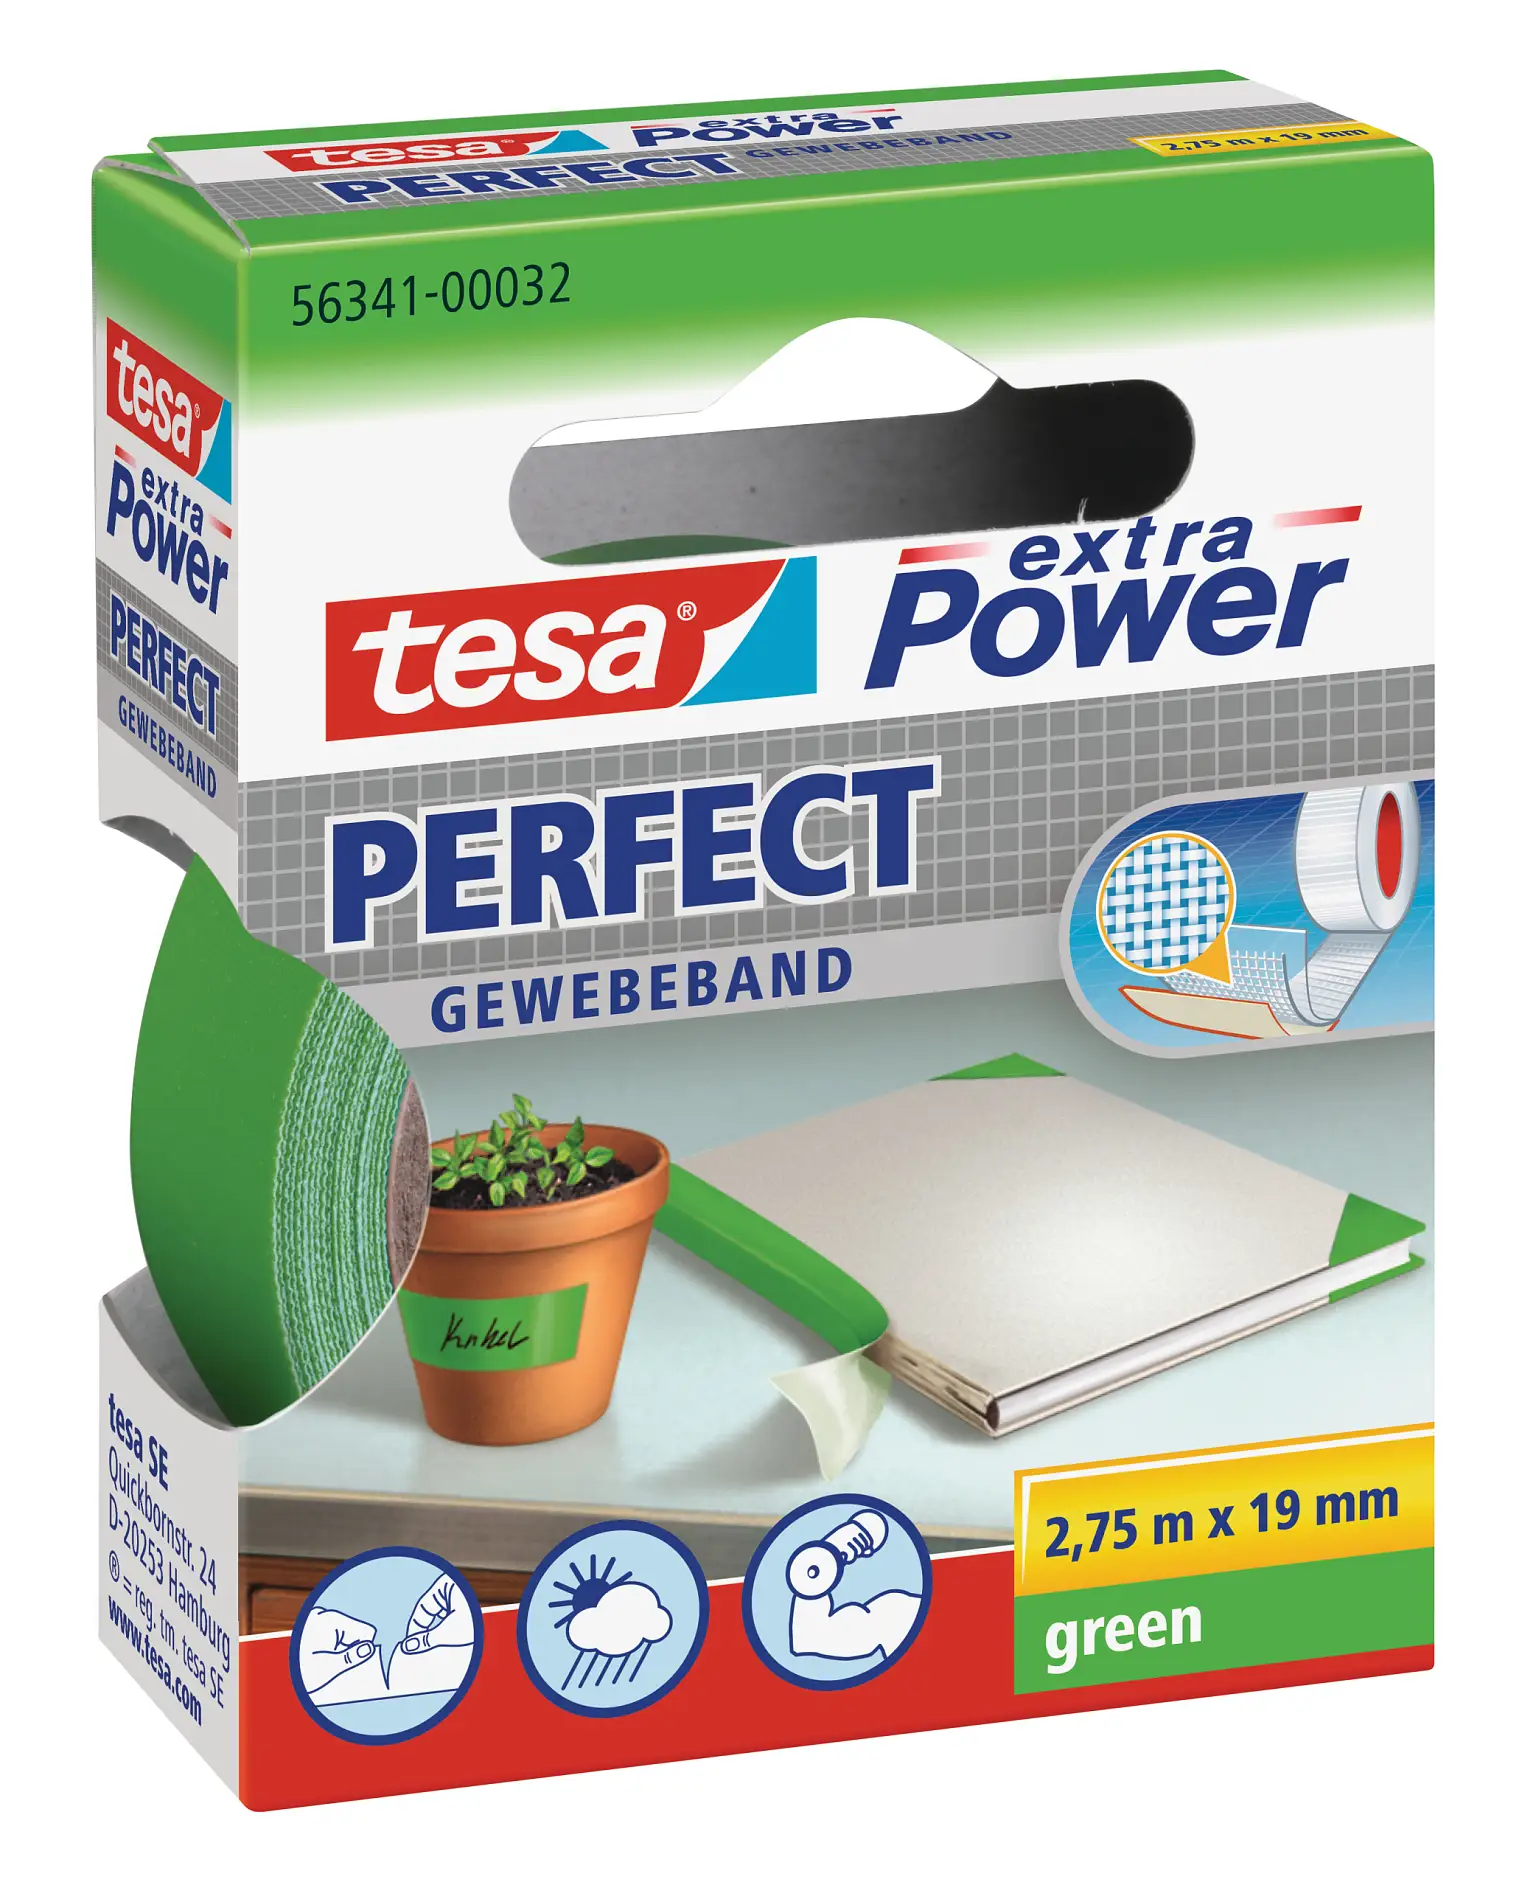 tesa trendpapier 8 / Idee 1: Girlande / tesa extra Power® Perfect Gewebeband